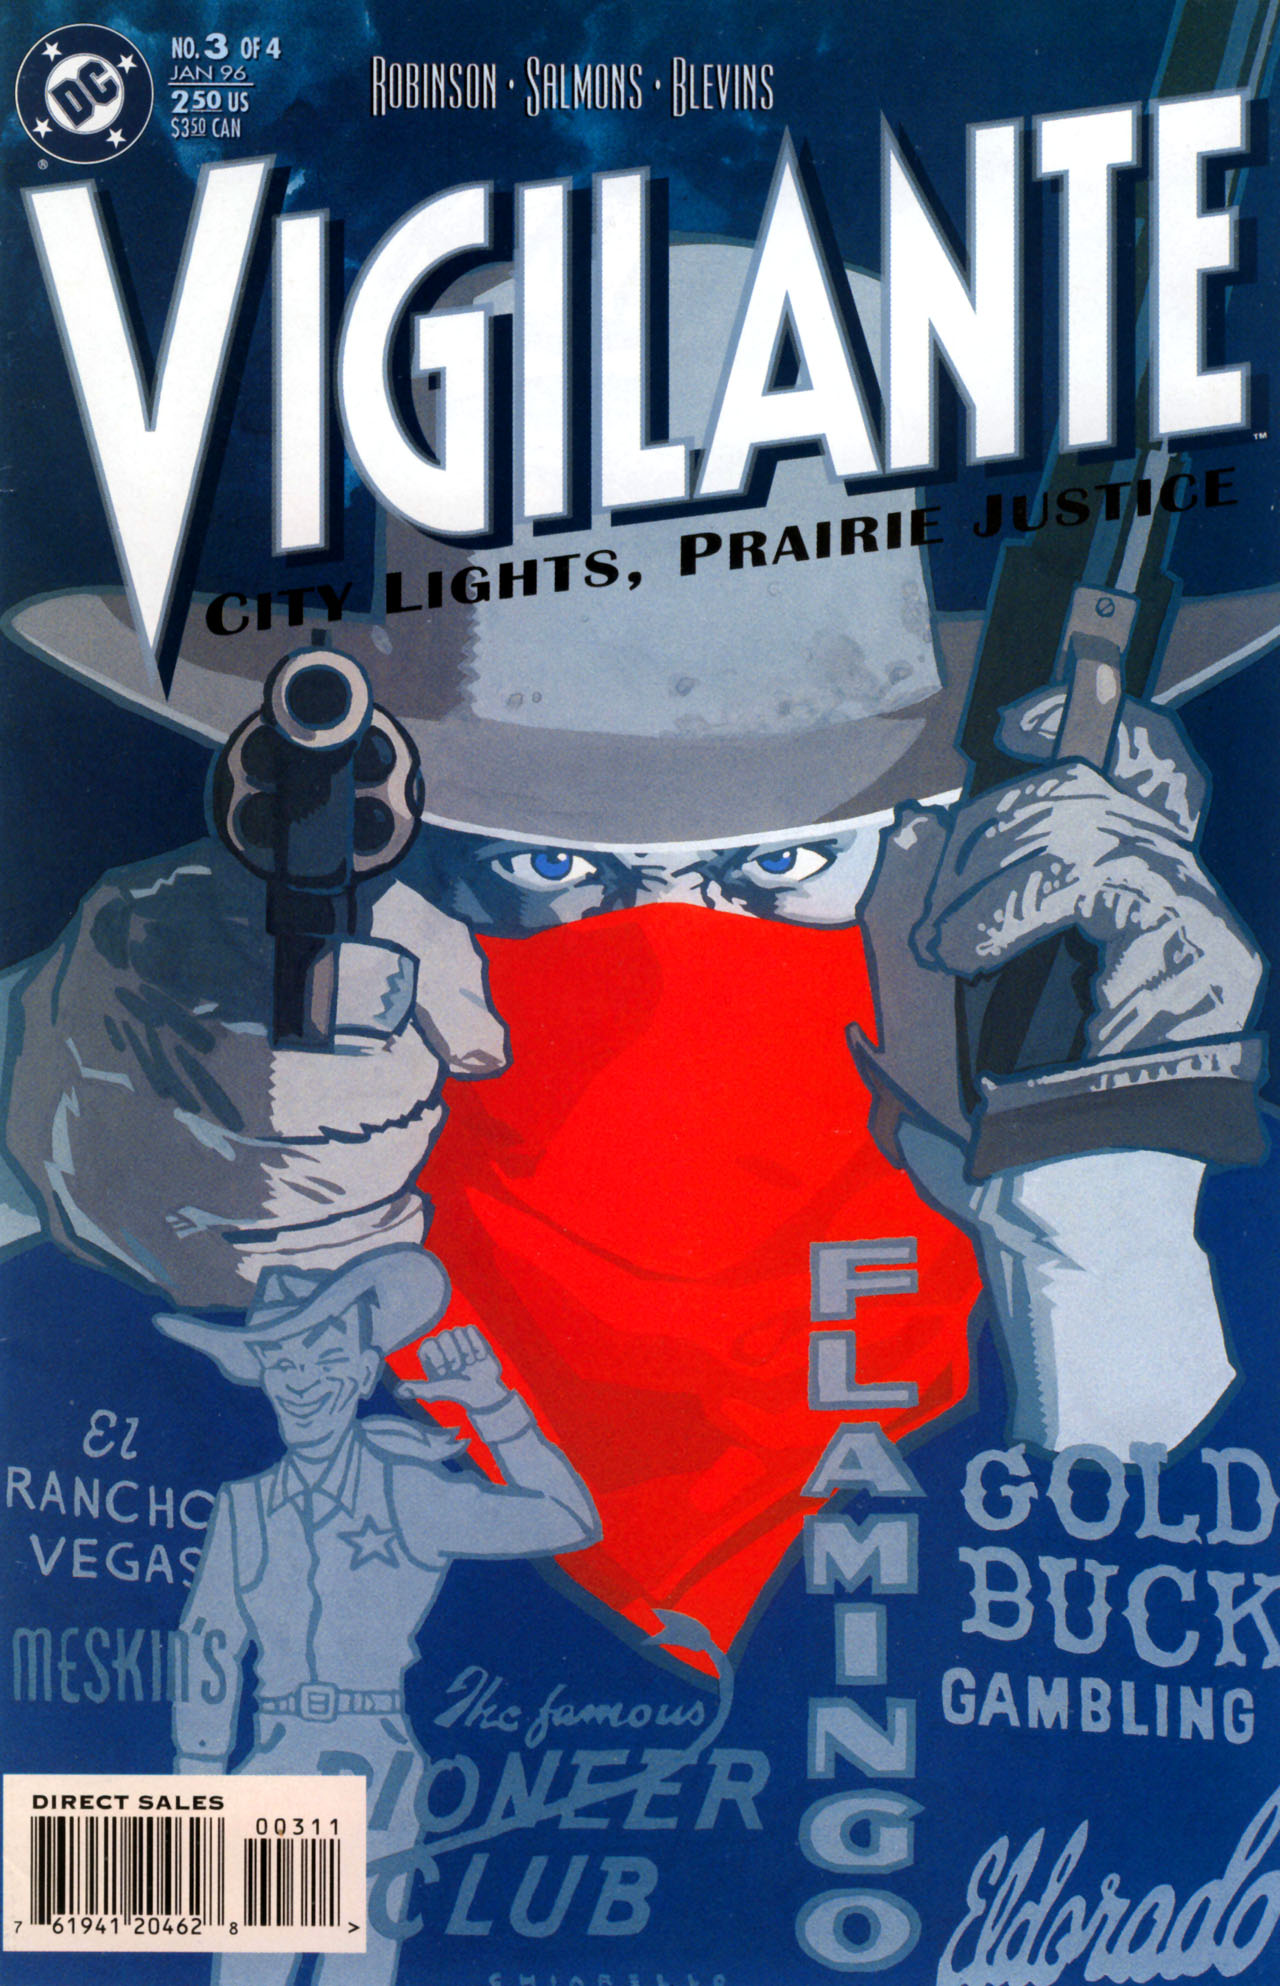 Read online Vigilante: City Lights, Prairie Justice comic -  Issue #3 - 1